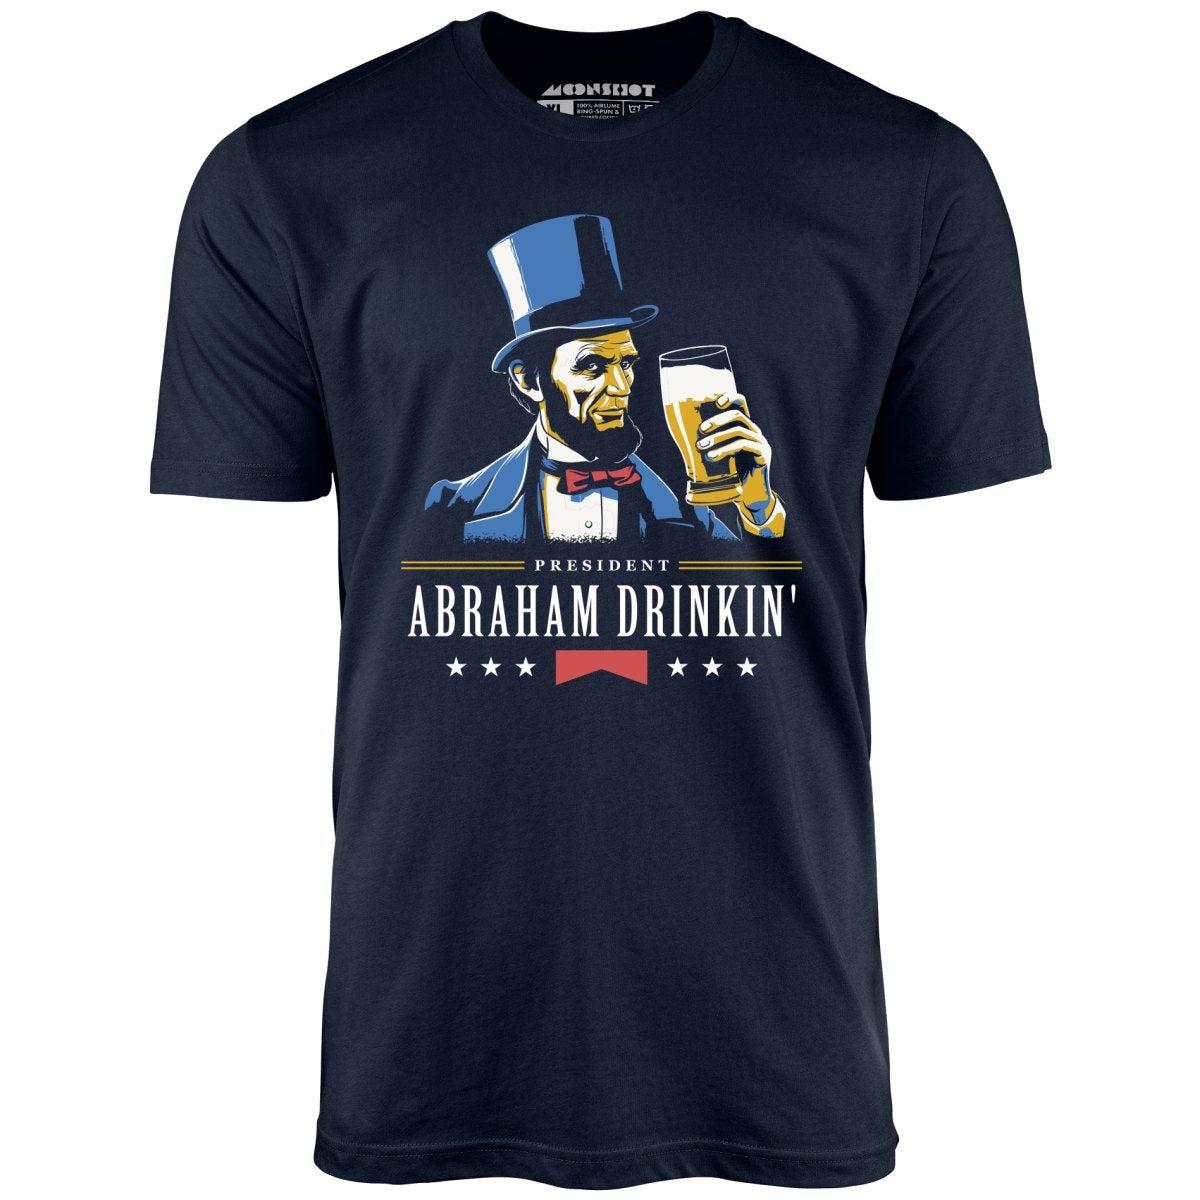 President Abraham Drinkin' - Unisex T-Shirt